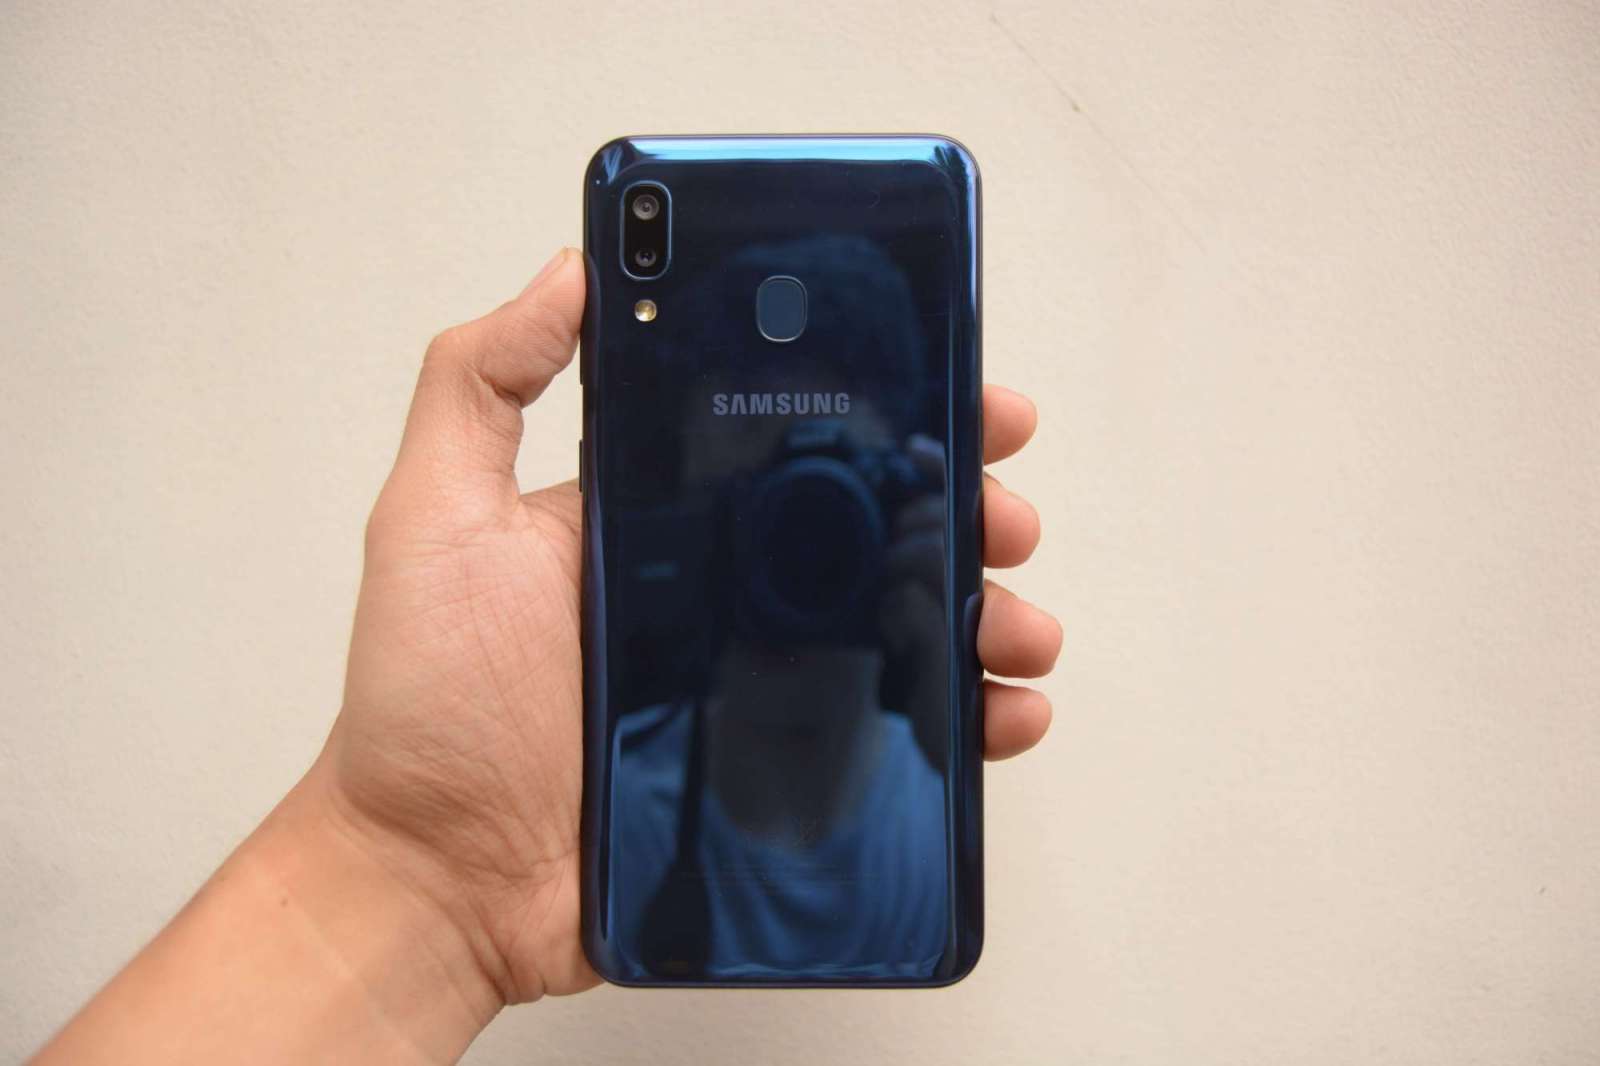 Handheld back - Samsung Galaxy A20 (Philippines)